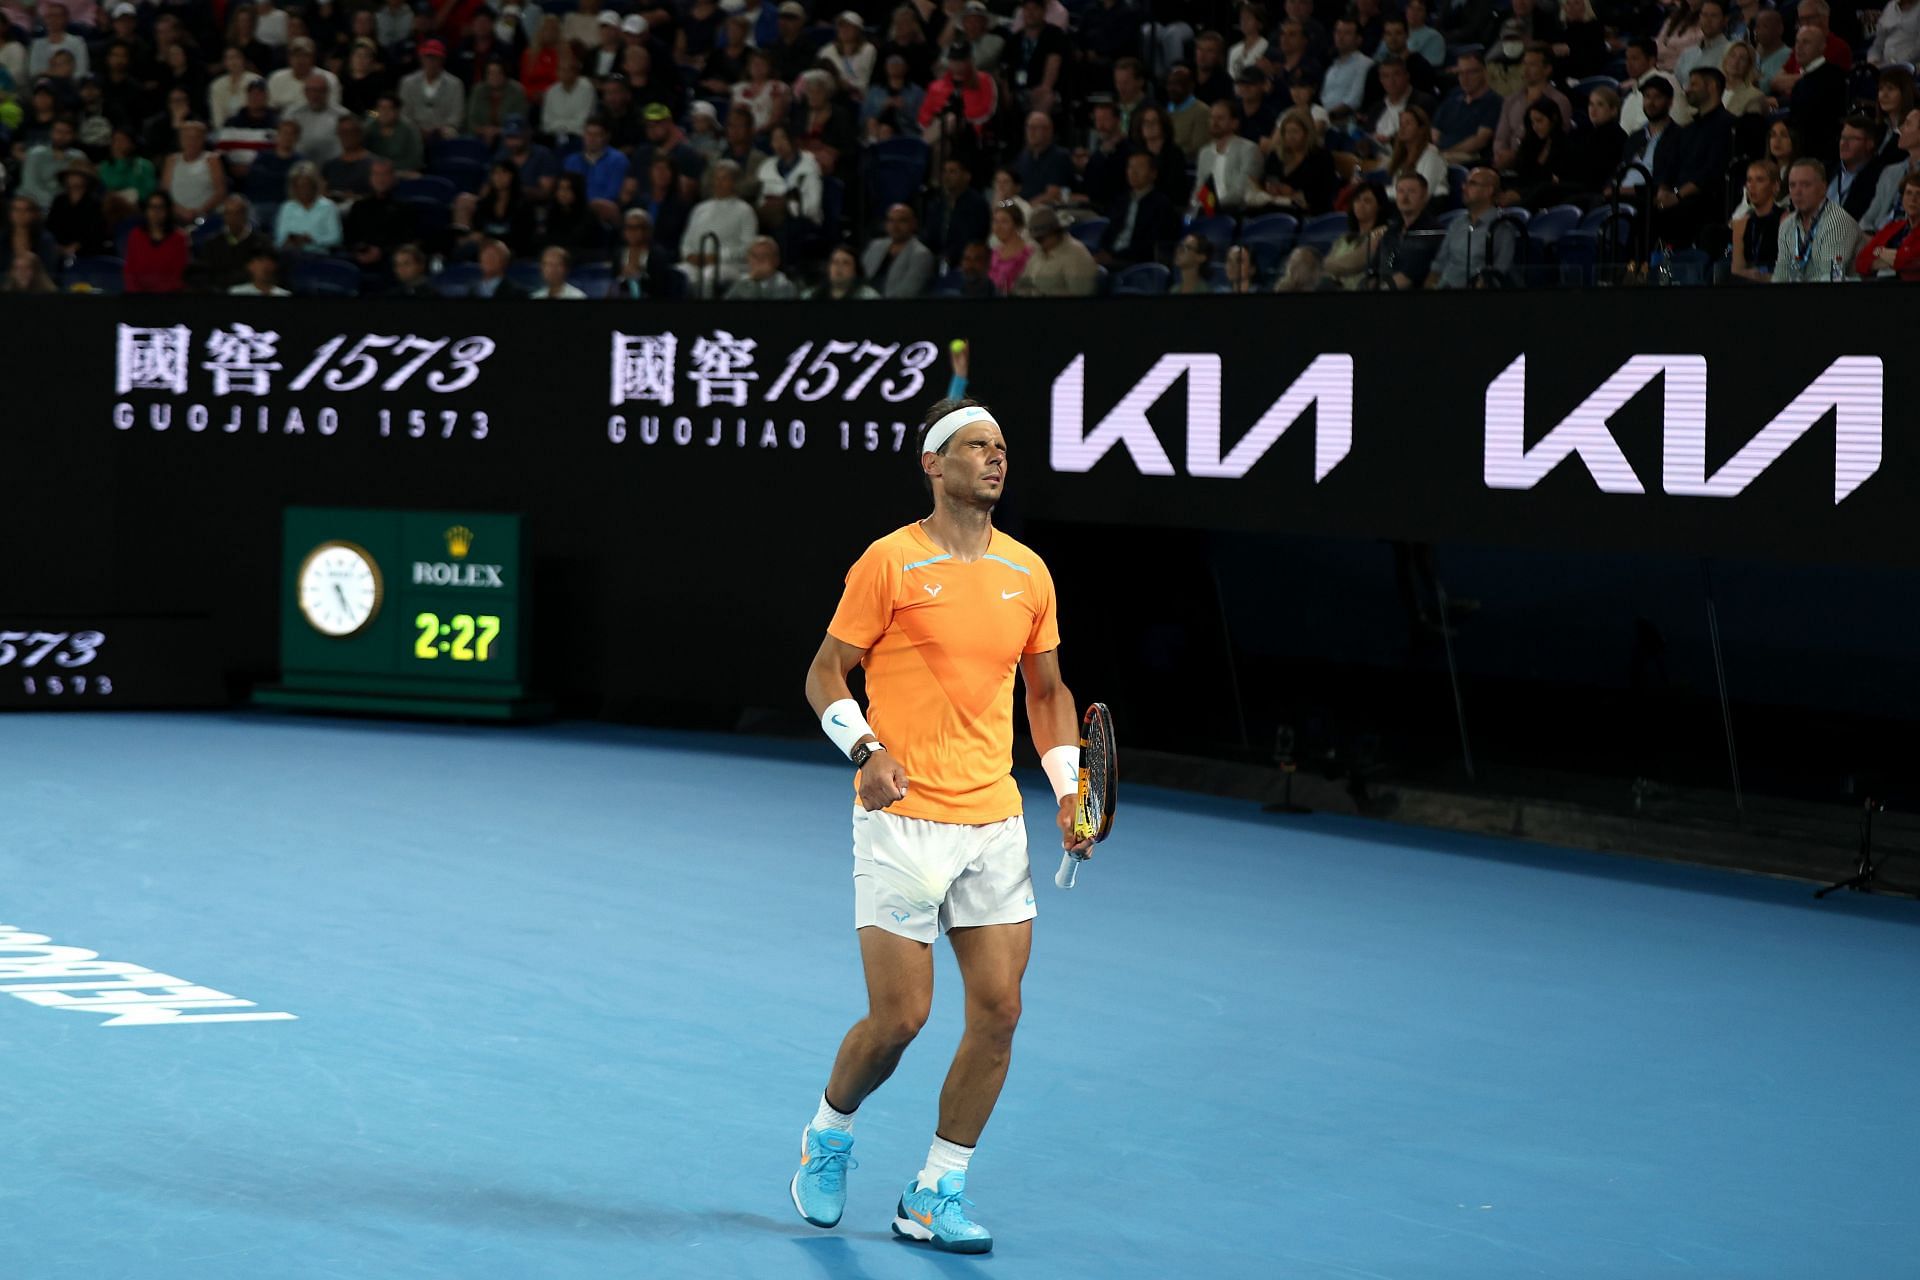 Rafael Nadal reacts during his 2023 Australian Open match.